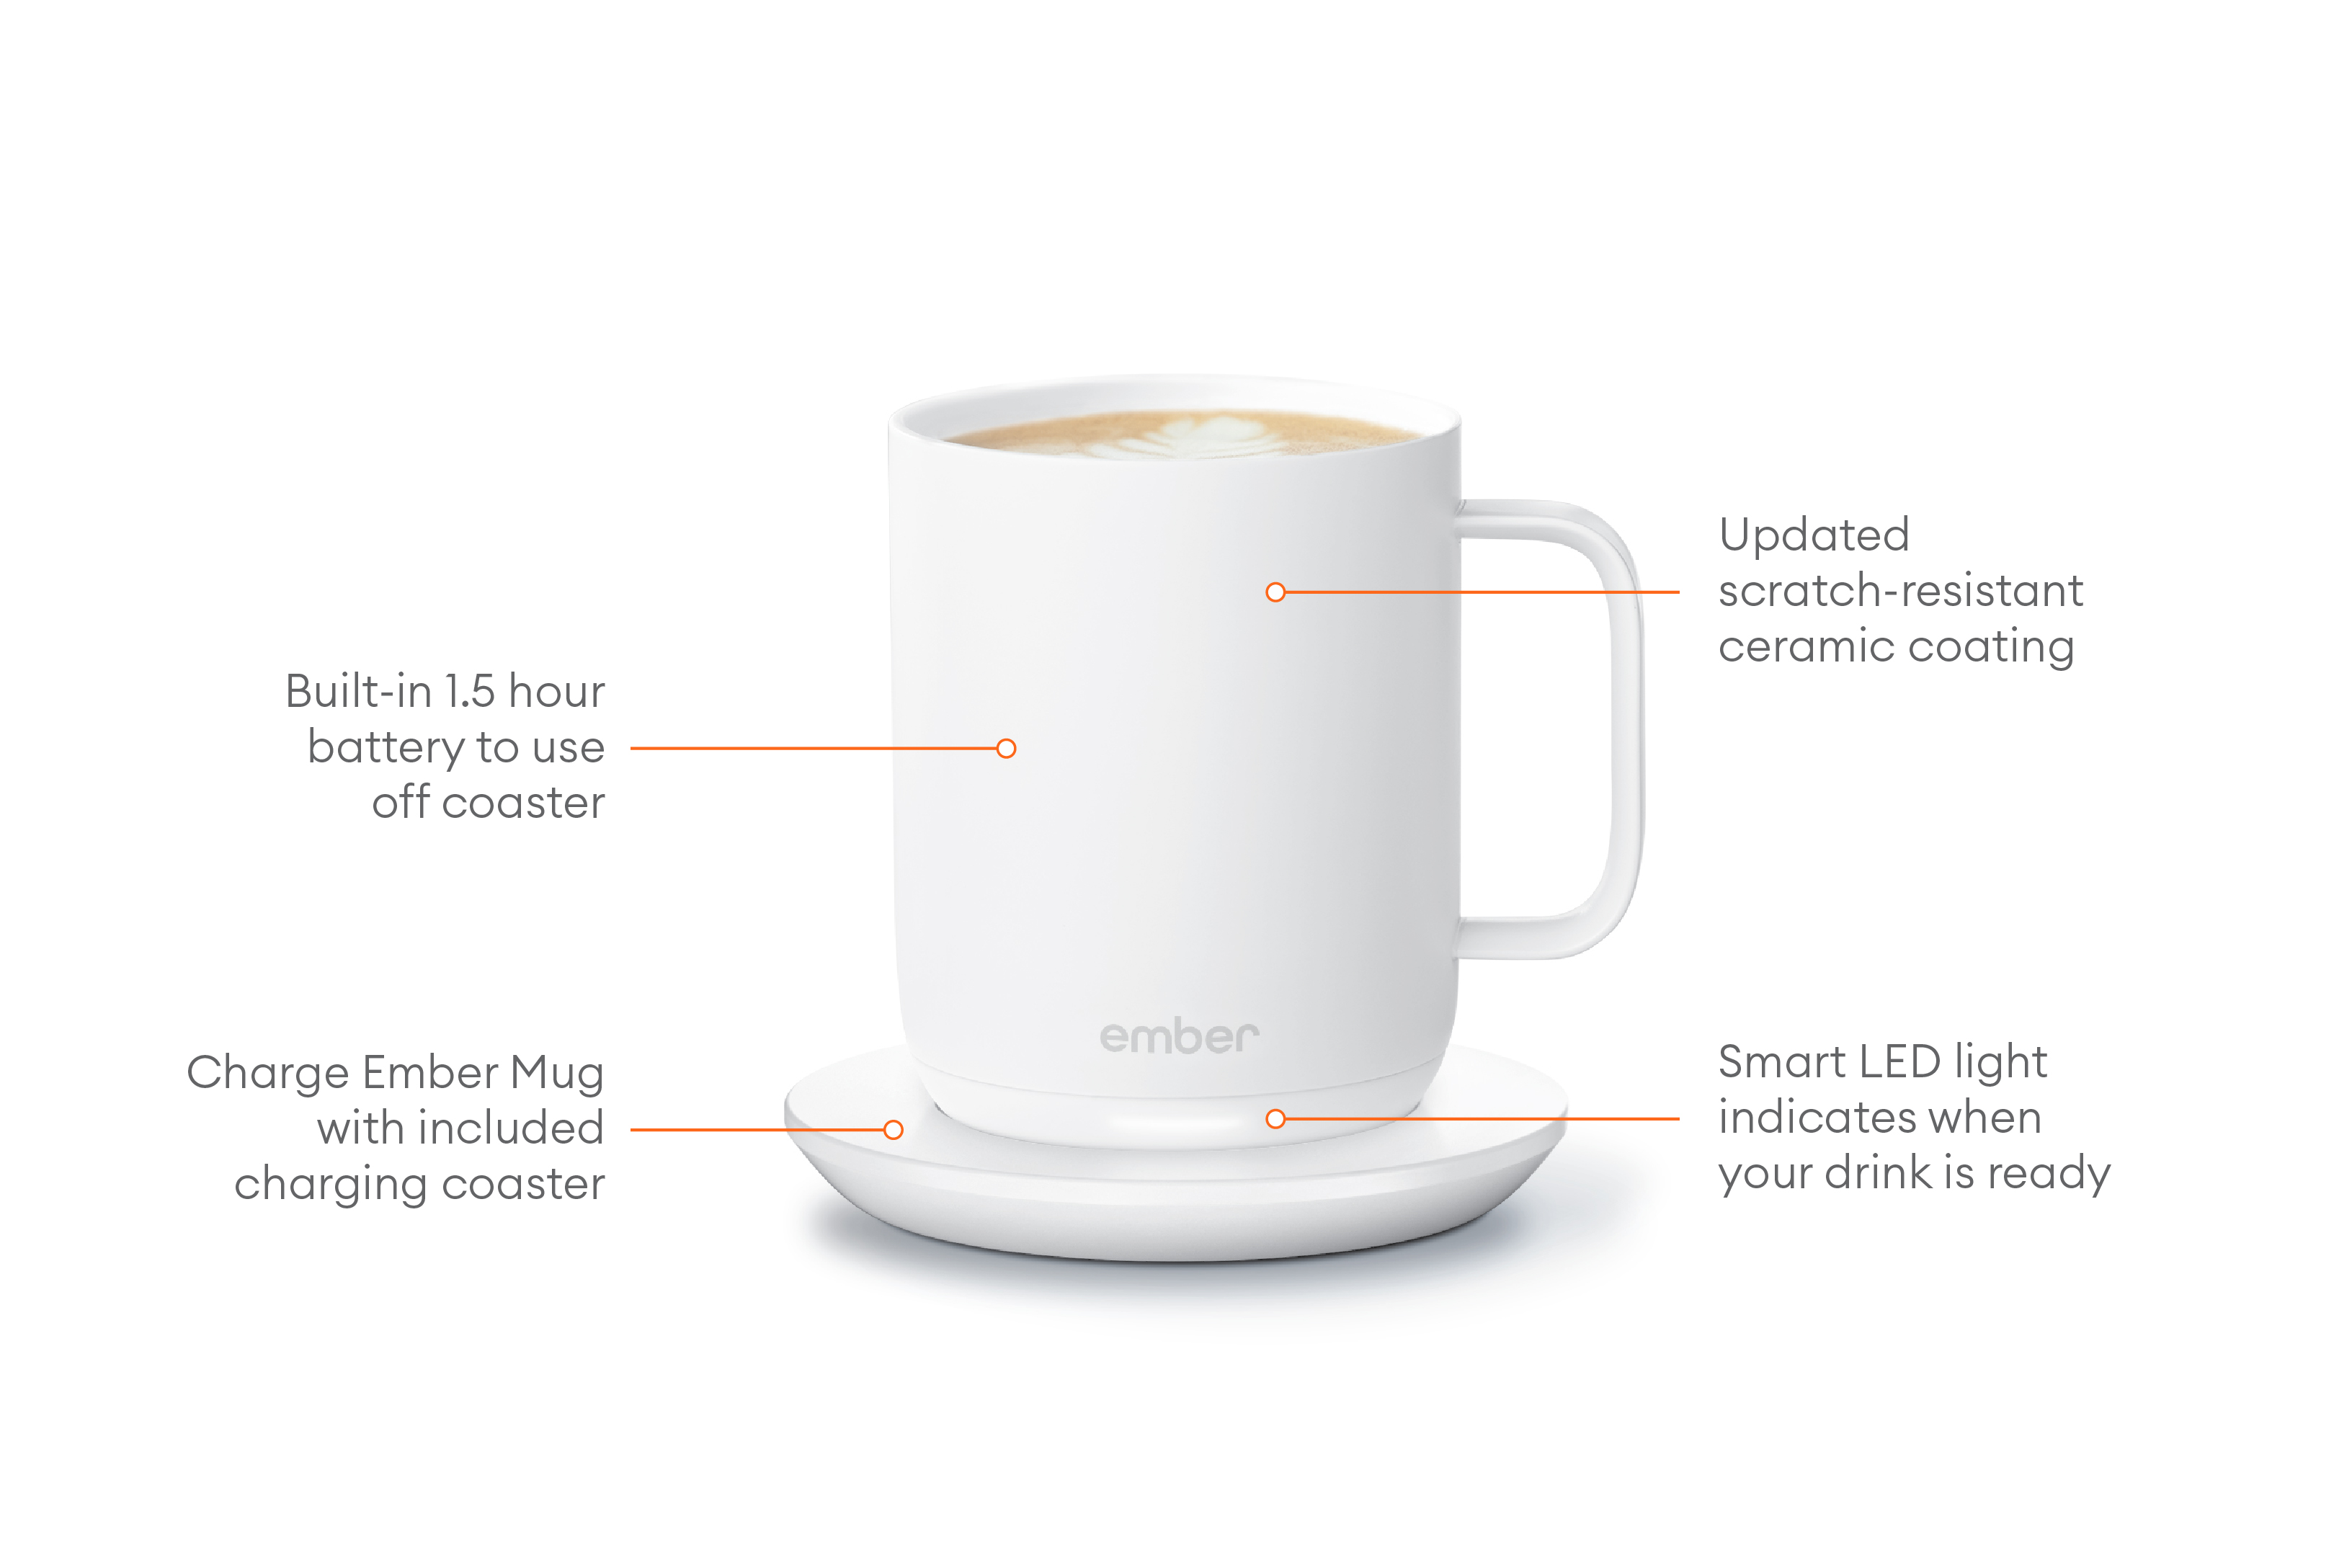 Ember Temperature Control Smart Mug 2, 10 oz, White, 1.5-hr Battery Life - App Controlled Heated Coffee Mug - Improved Design - image 6 of 9